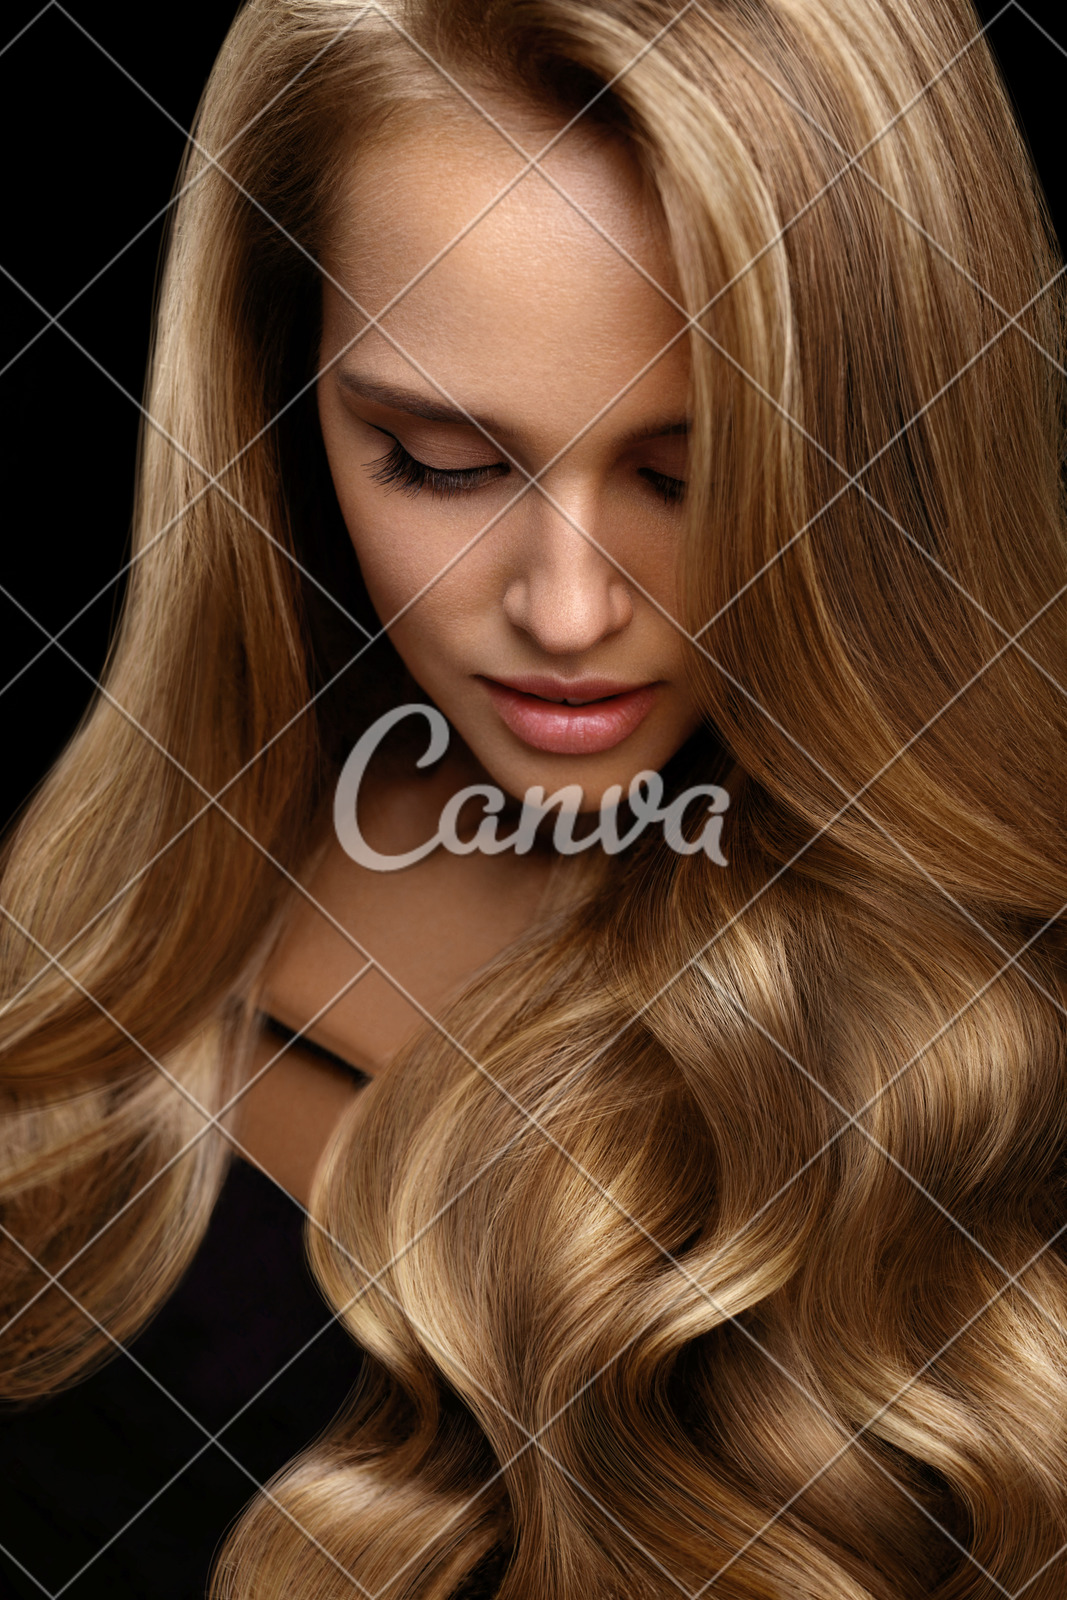 Volume Hair Beautiful Woman Model With Long Blonde Hair Photos